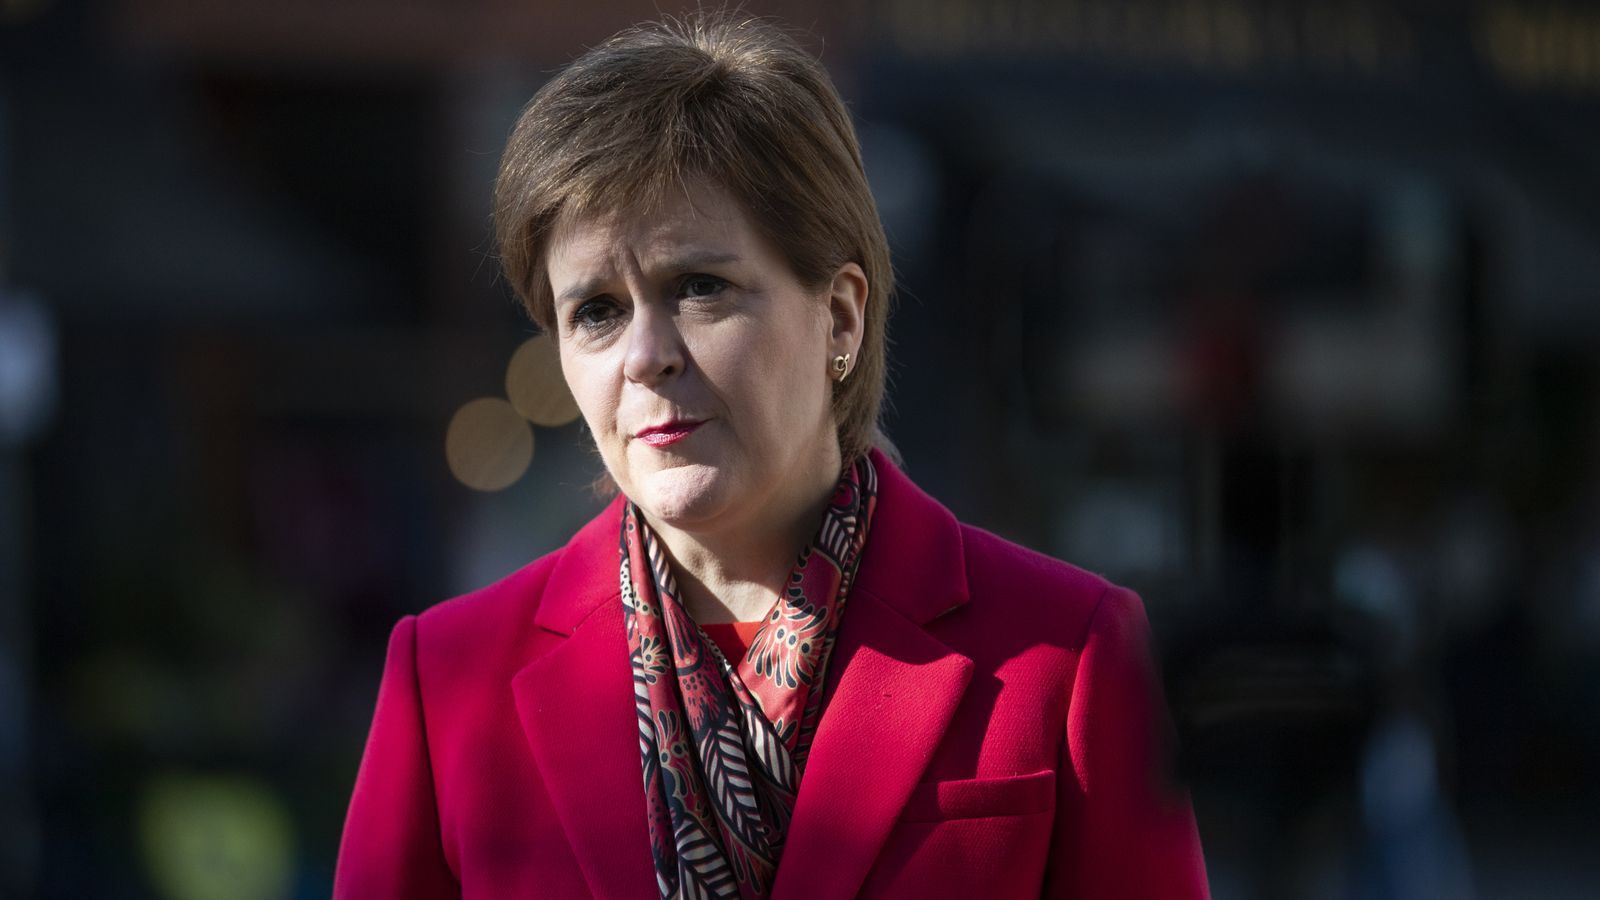 Nicola Sturgeon: Scotland independence referendum would be legal unless court blocks it